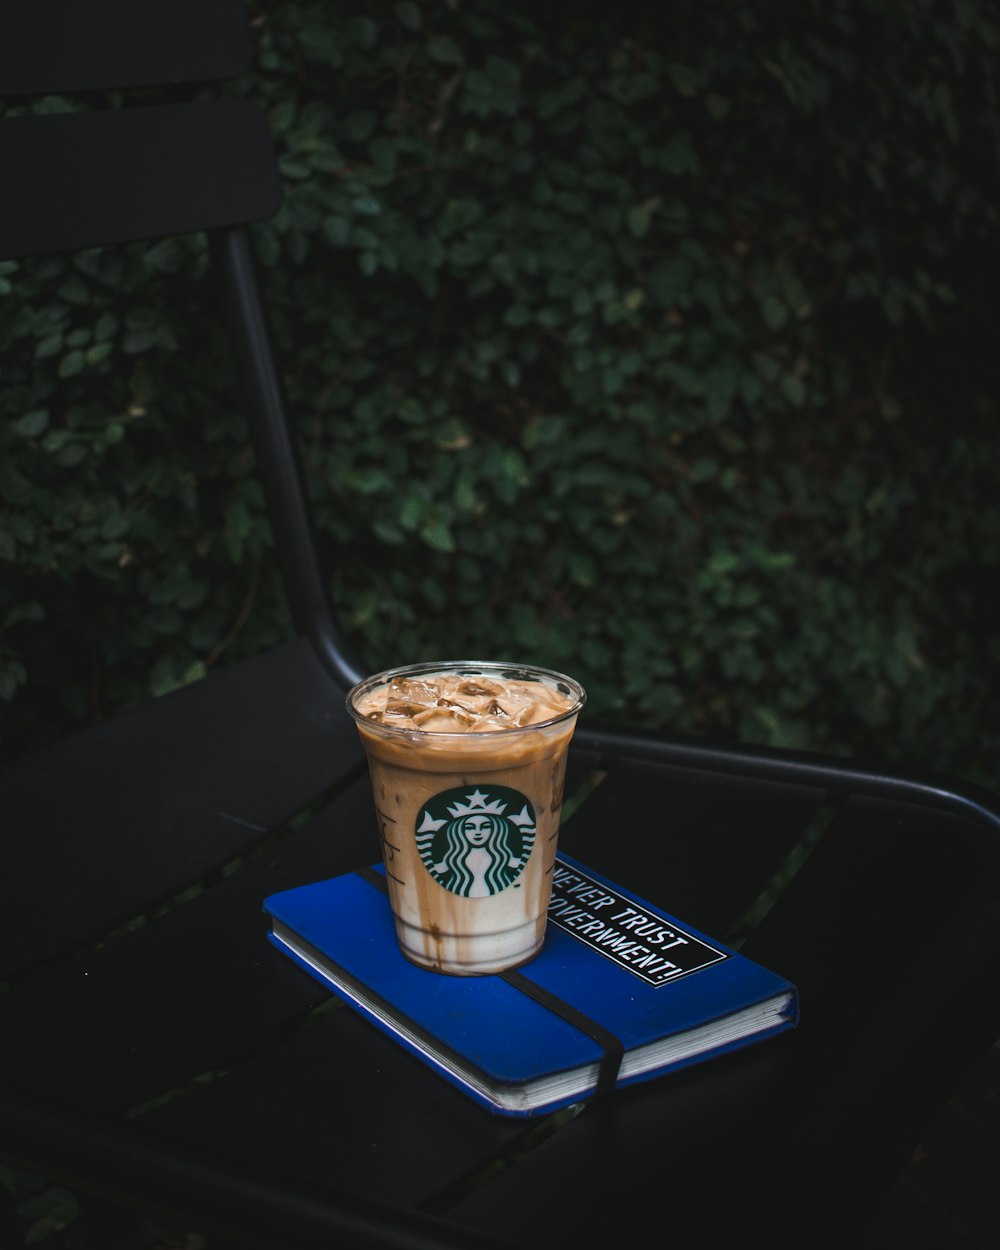 Starbucks plastic cup on blue book